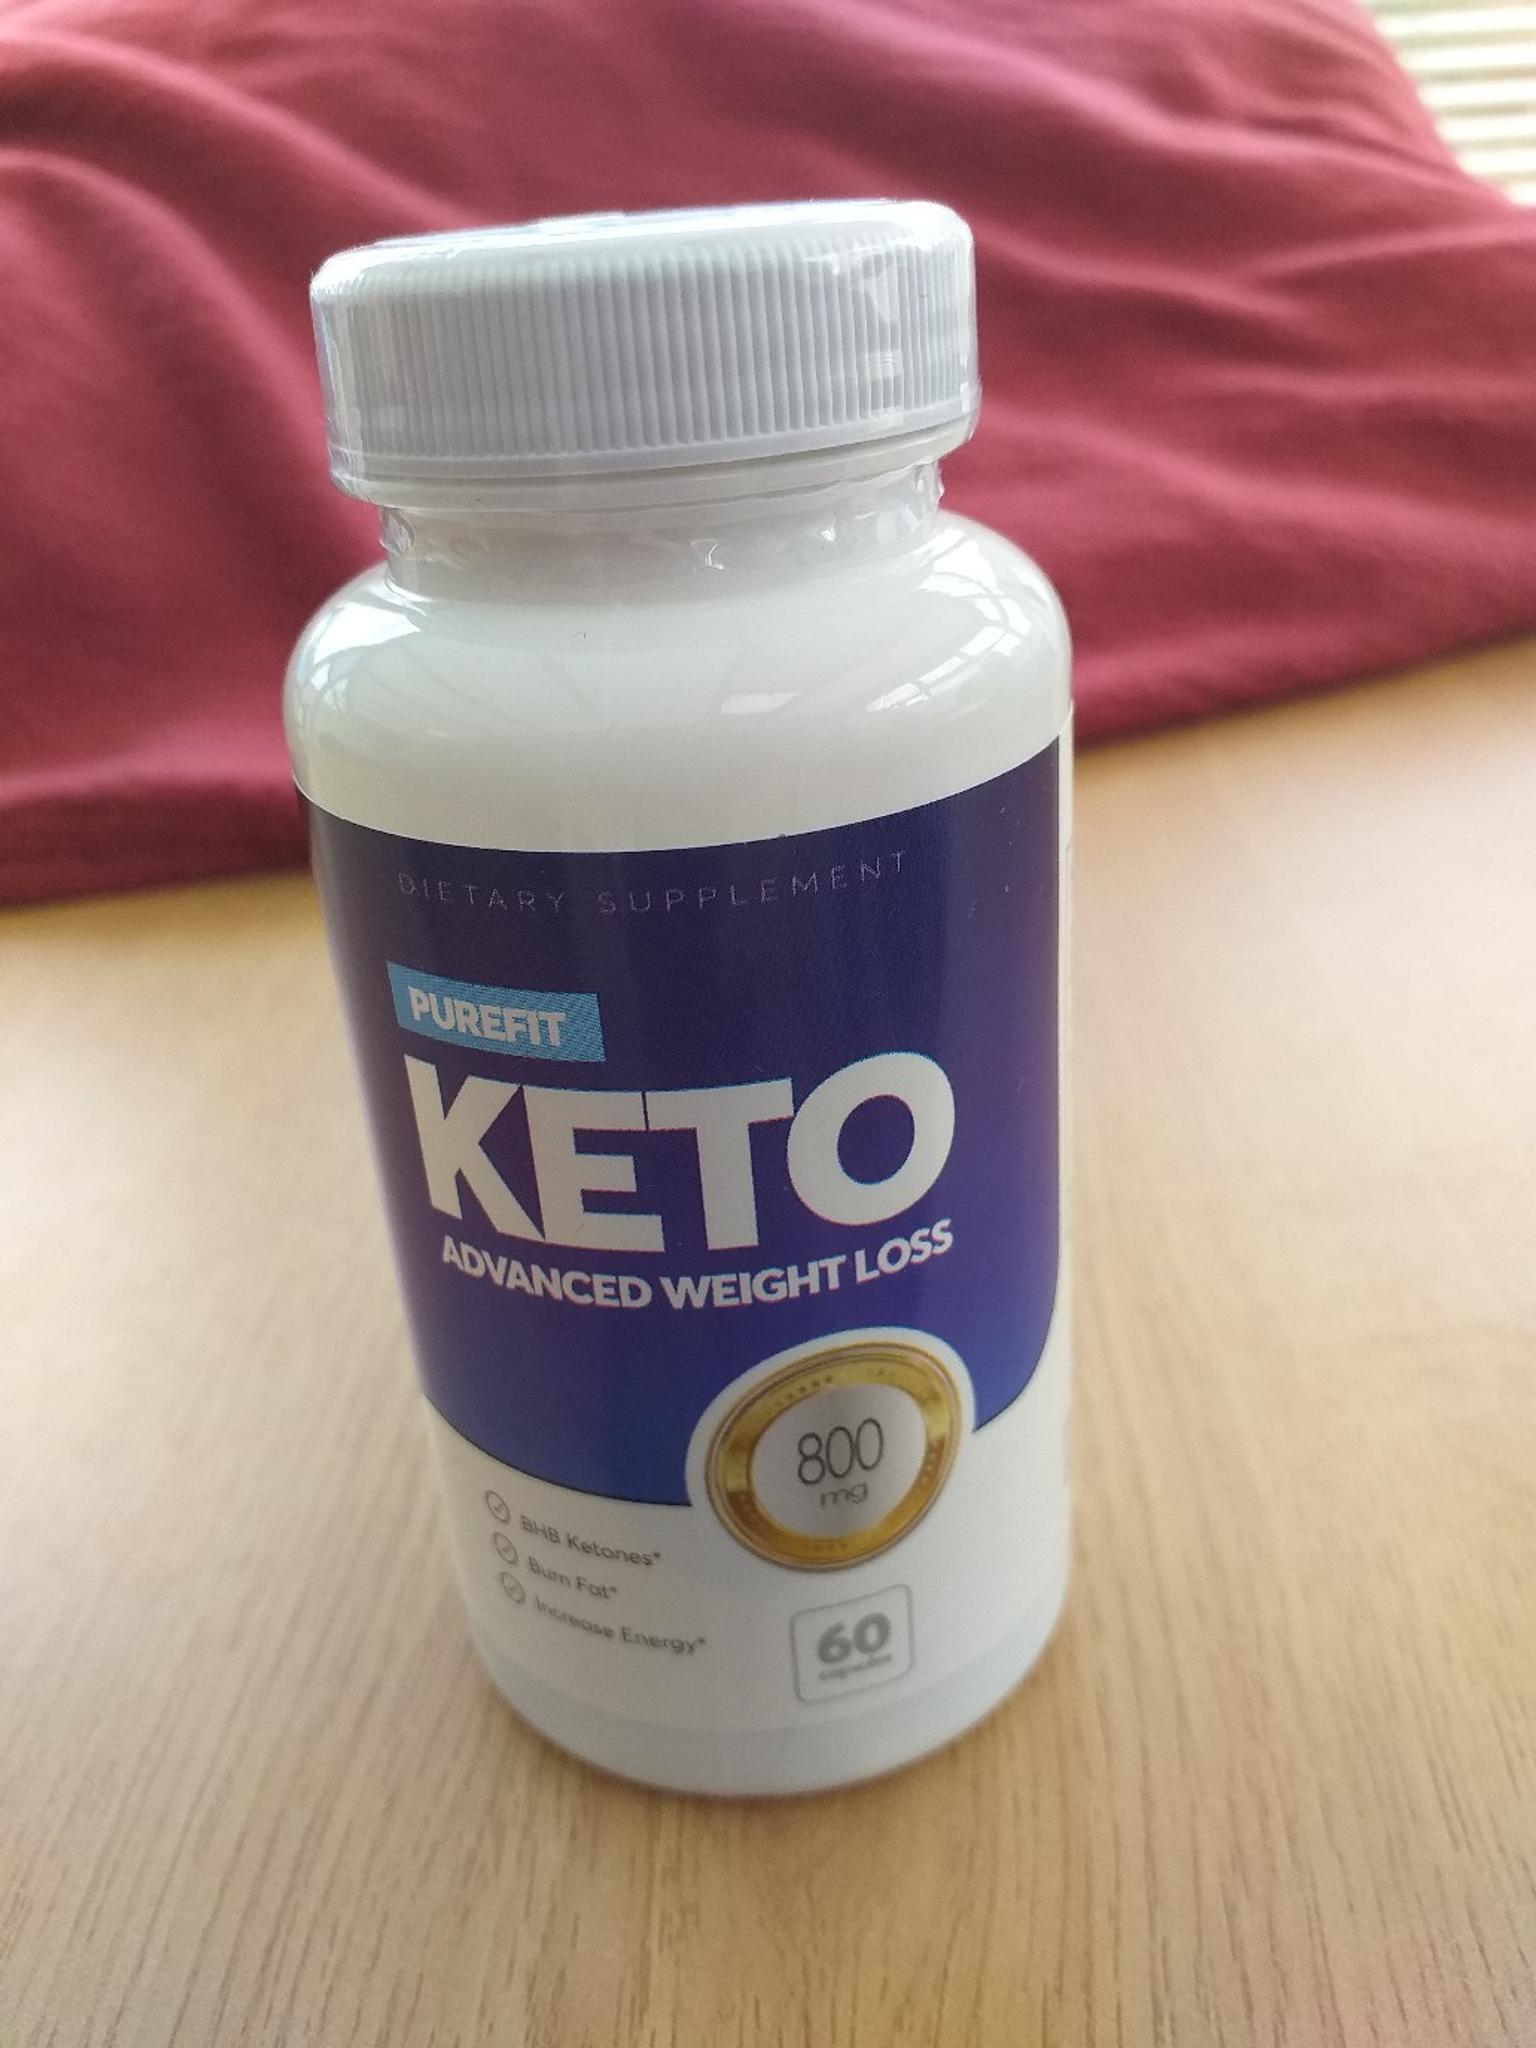 keto advanced weight loss capsules